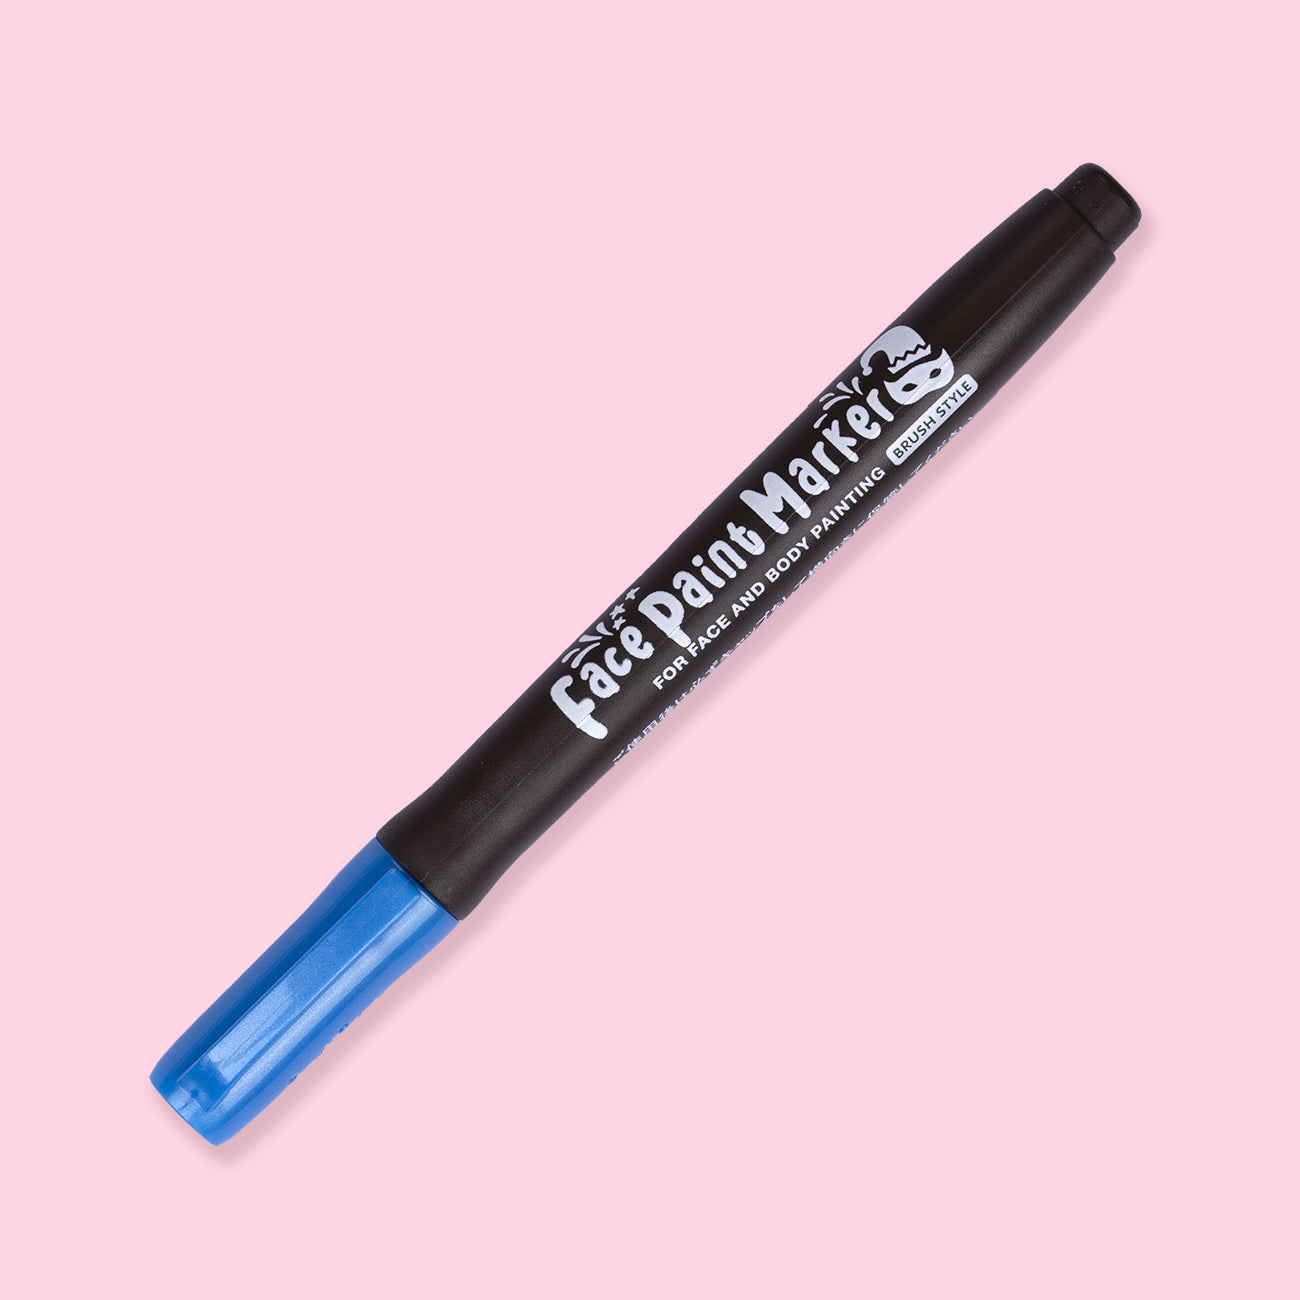 Shachihata Face Paint Brush Marker - Metallic Blue